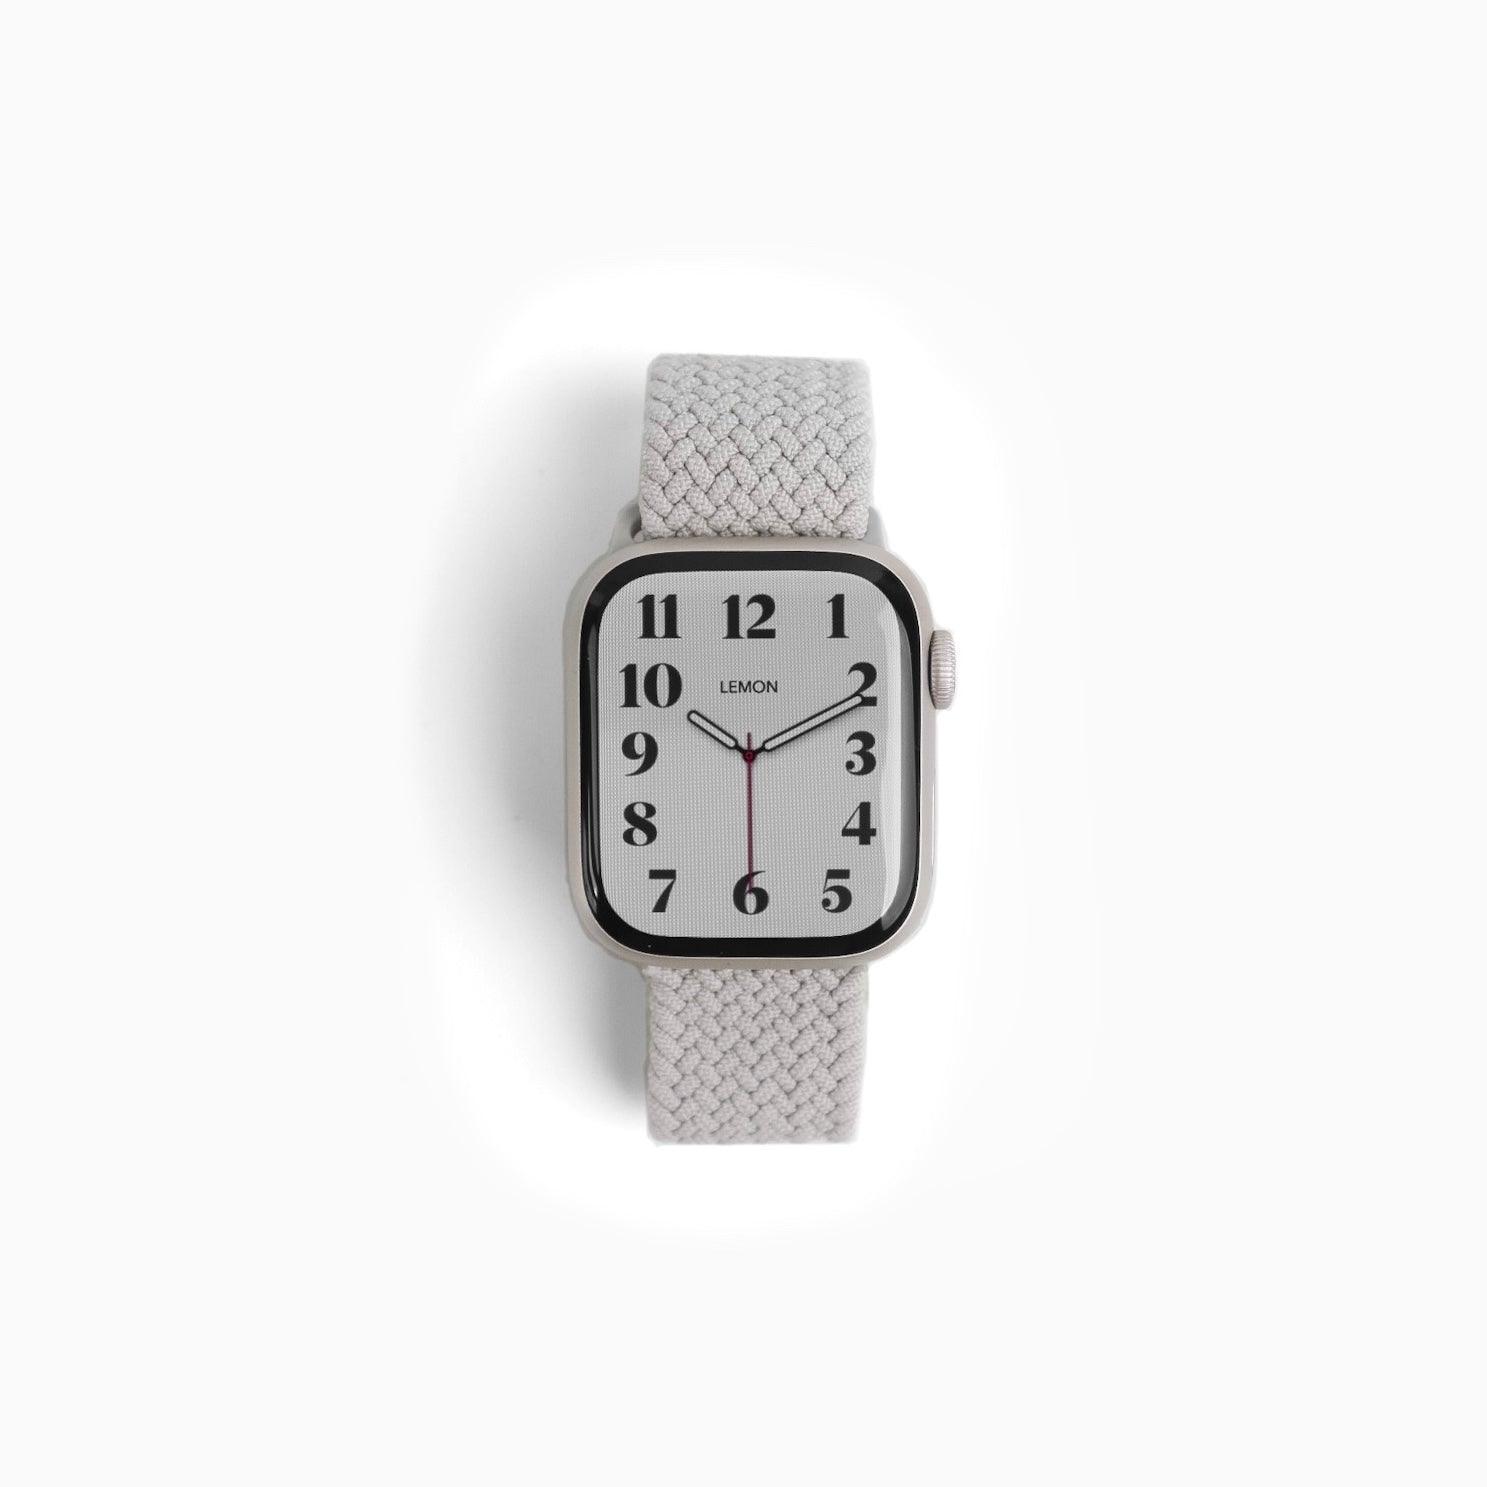 Cloud Nylon Apple Watch Band - Light Grey